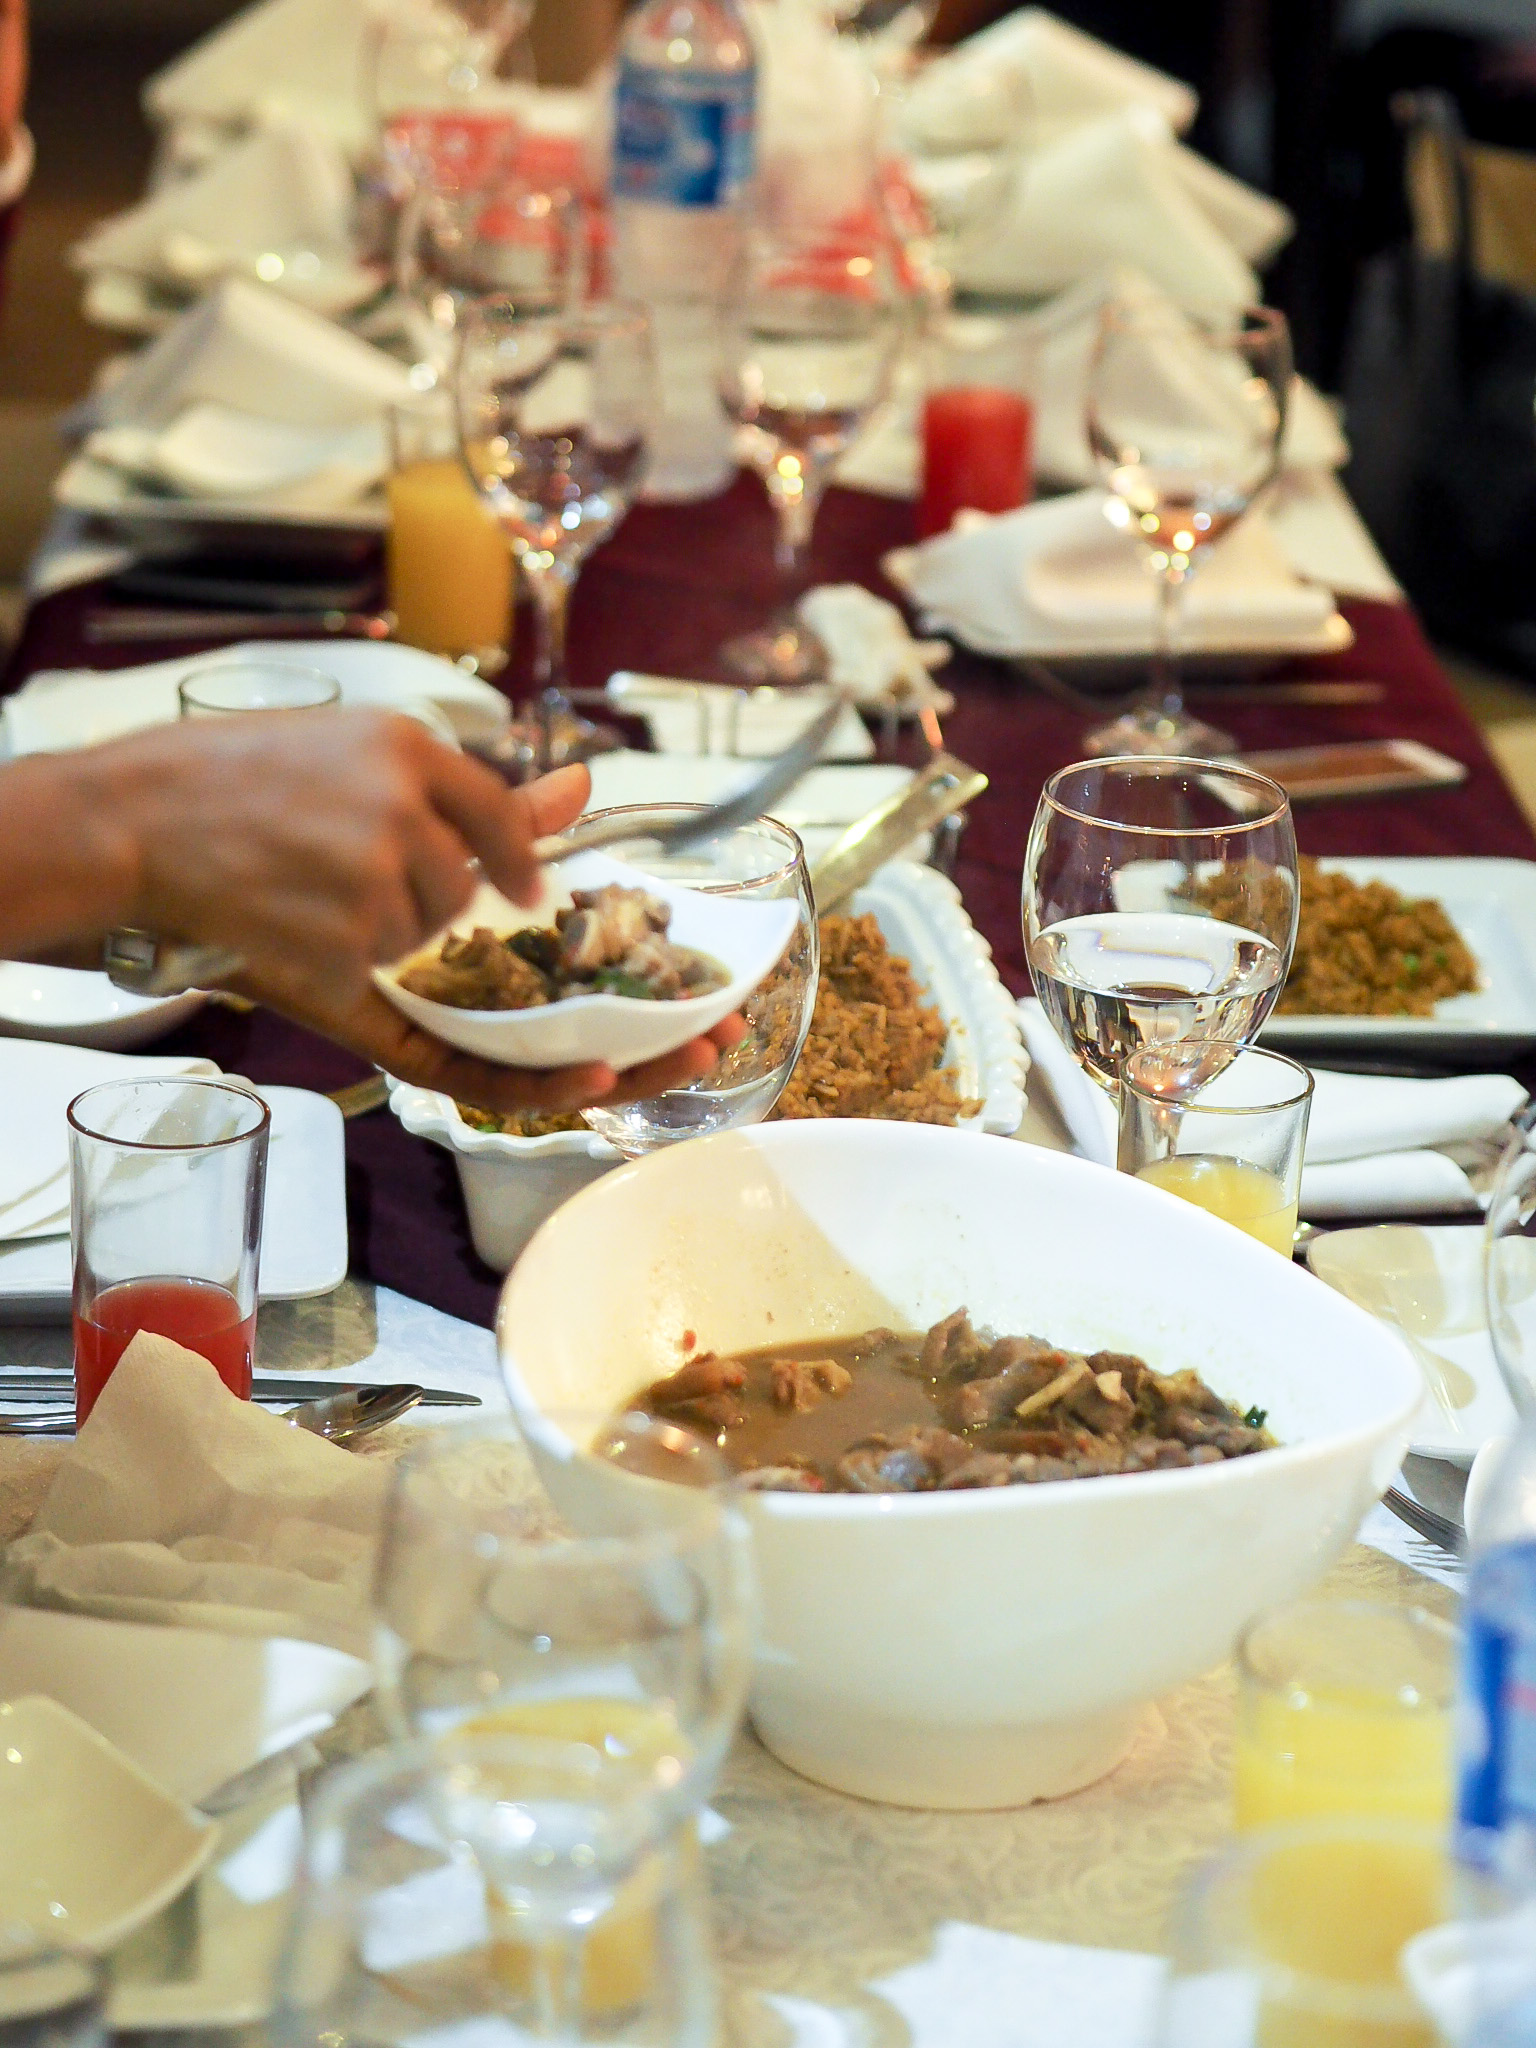 Birthday dinner setup at Splice platter Abuja